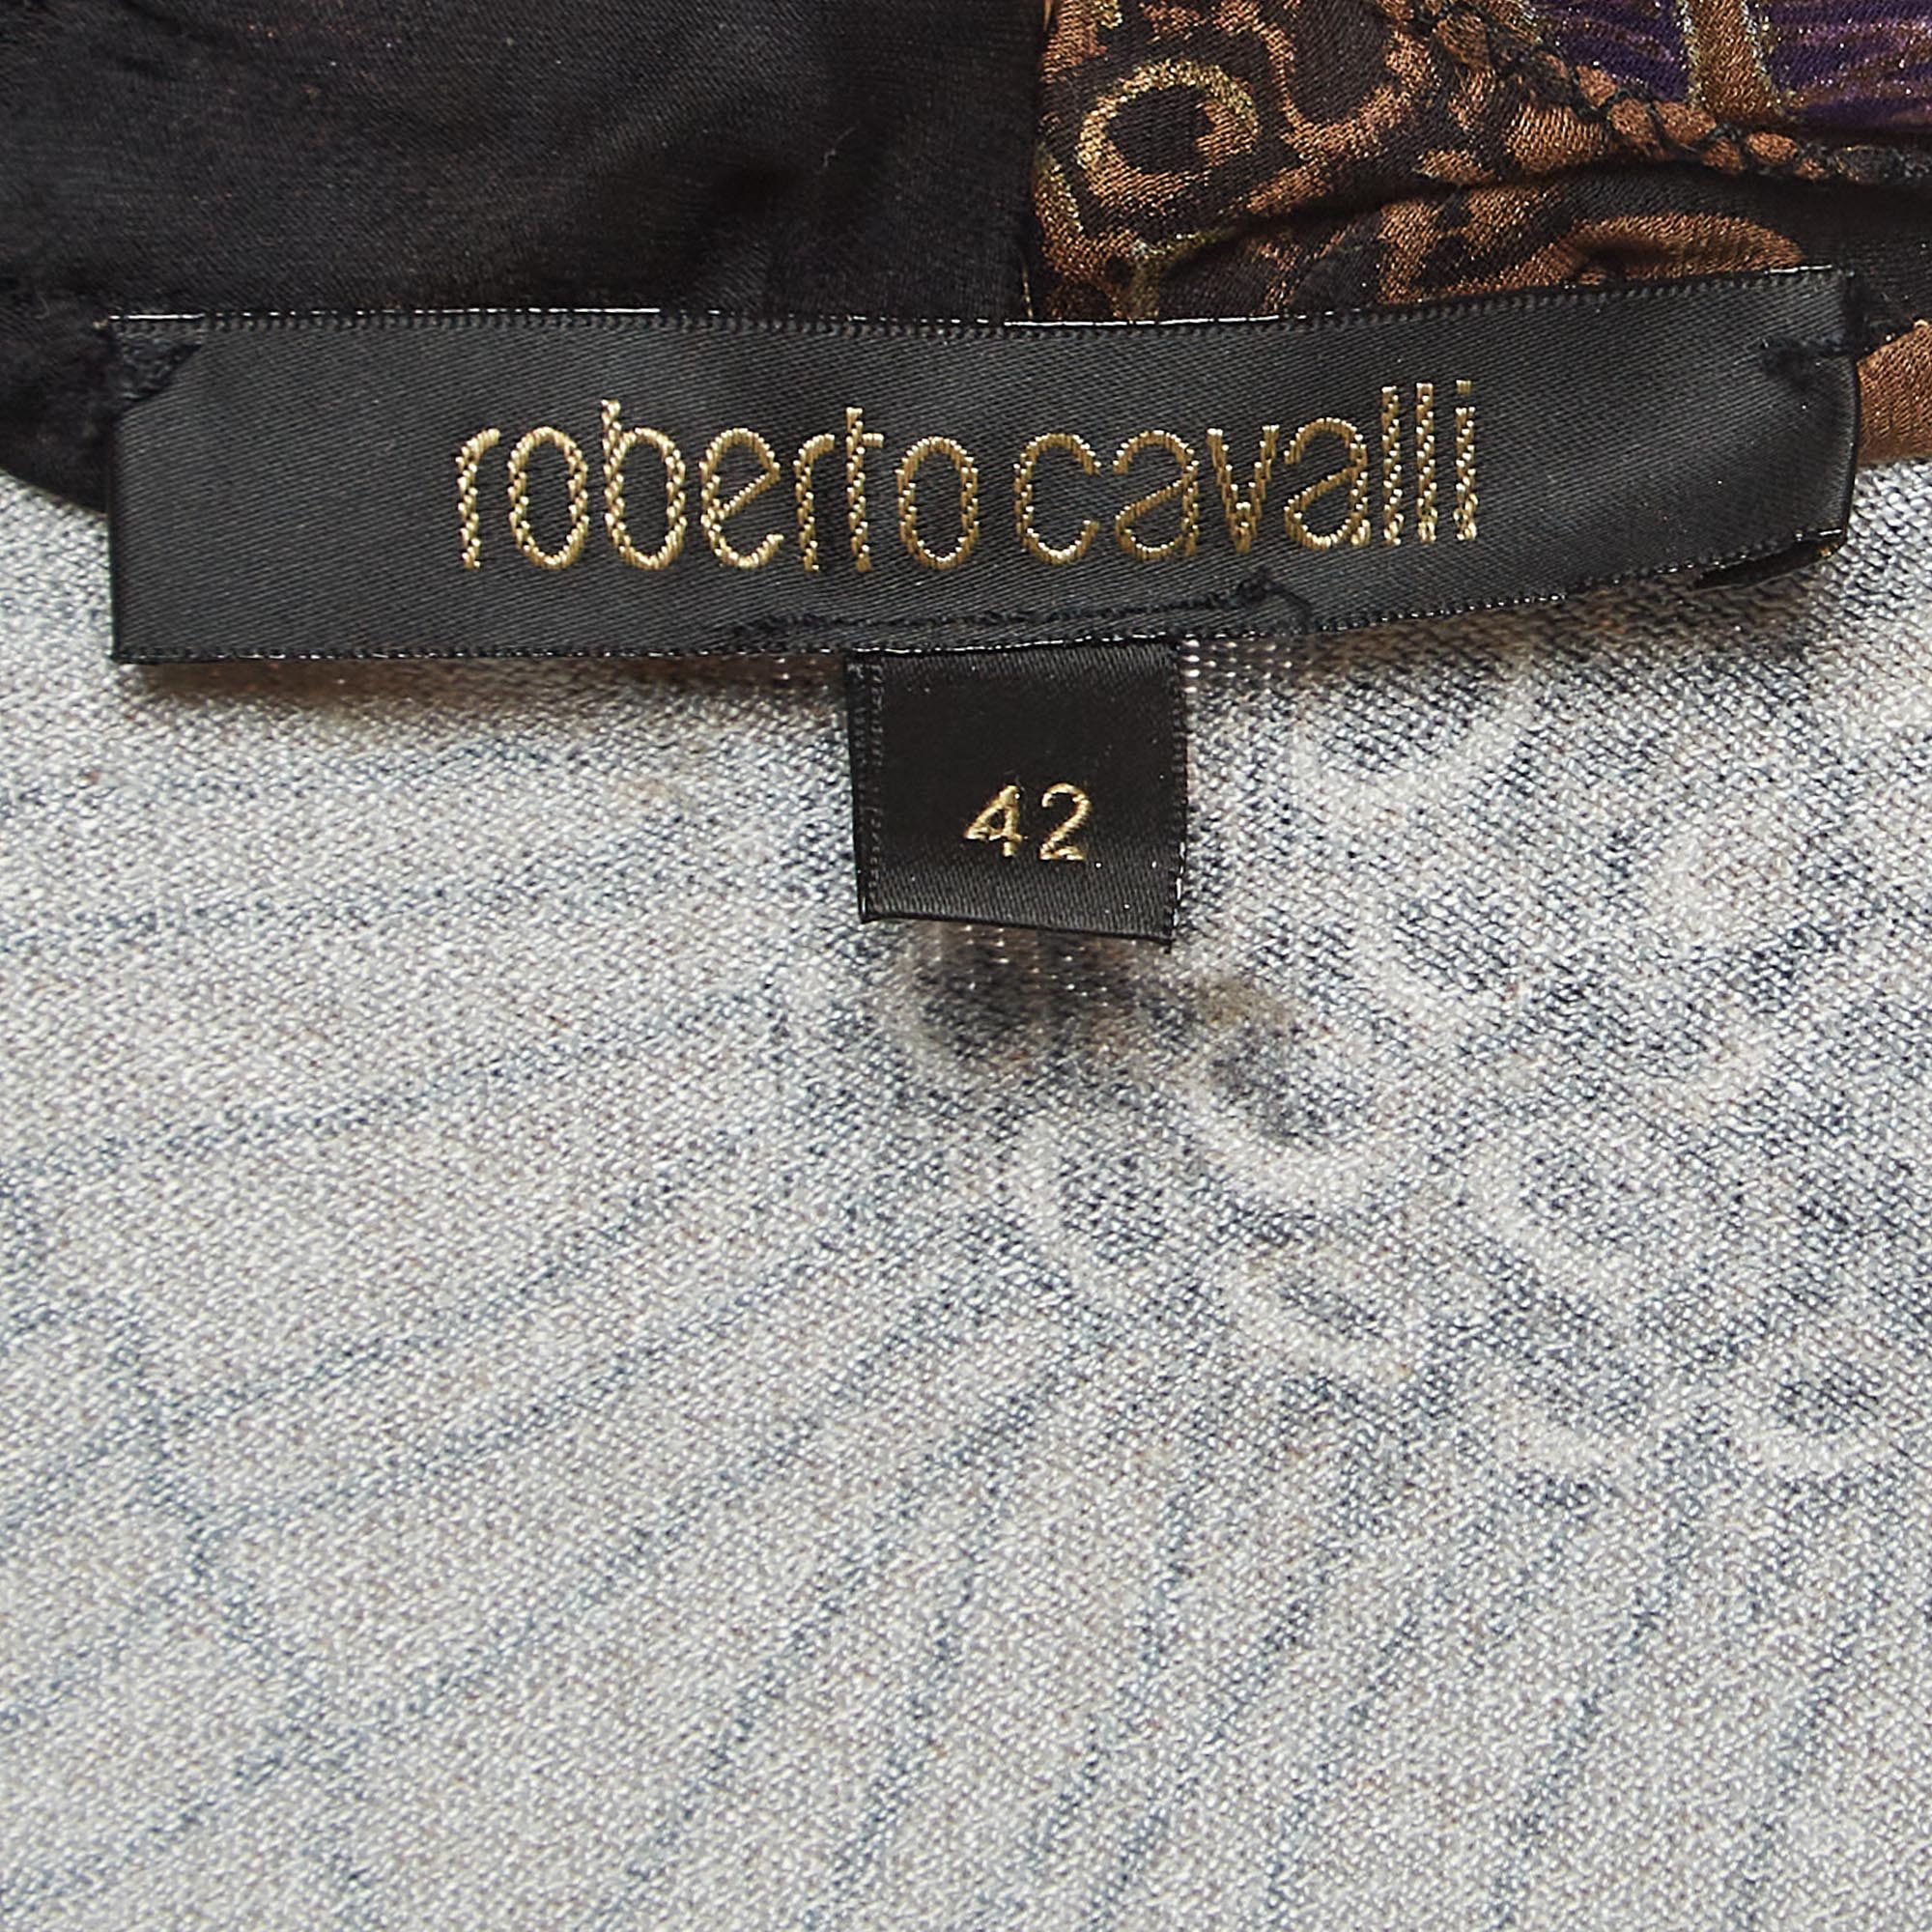 Roberto Cavalli Brown Floral Print Knit Mink Fur Trimmed Top M